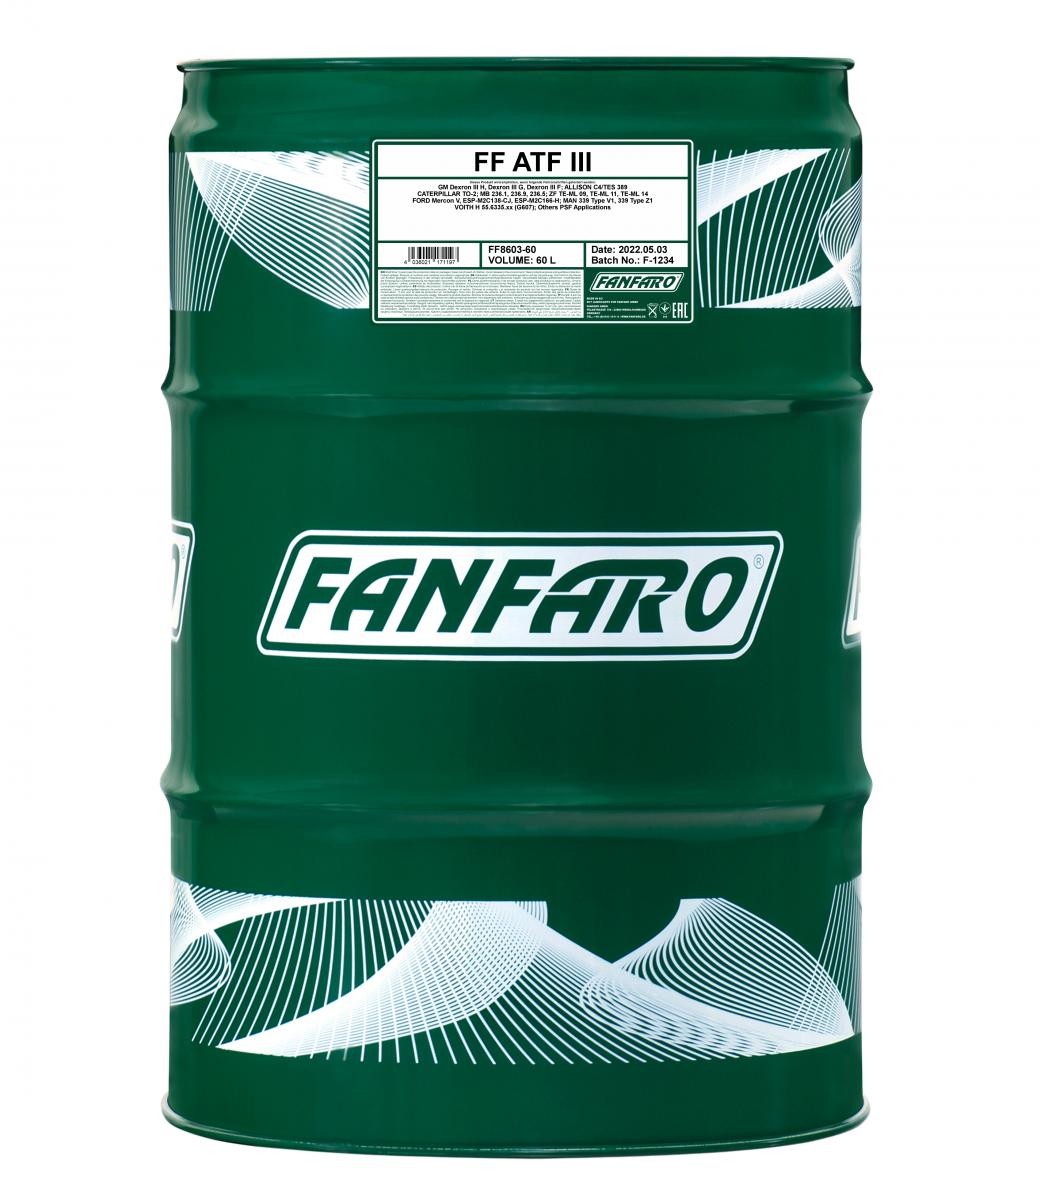 FF8603-60 FANFARO Automatikgetriebeöl RENAULT TRUCKS C-Serie